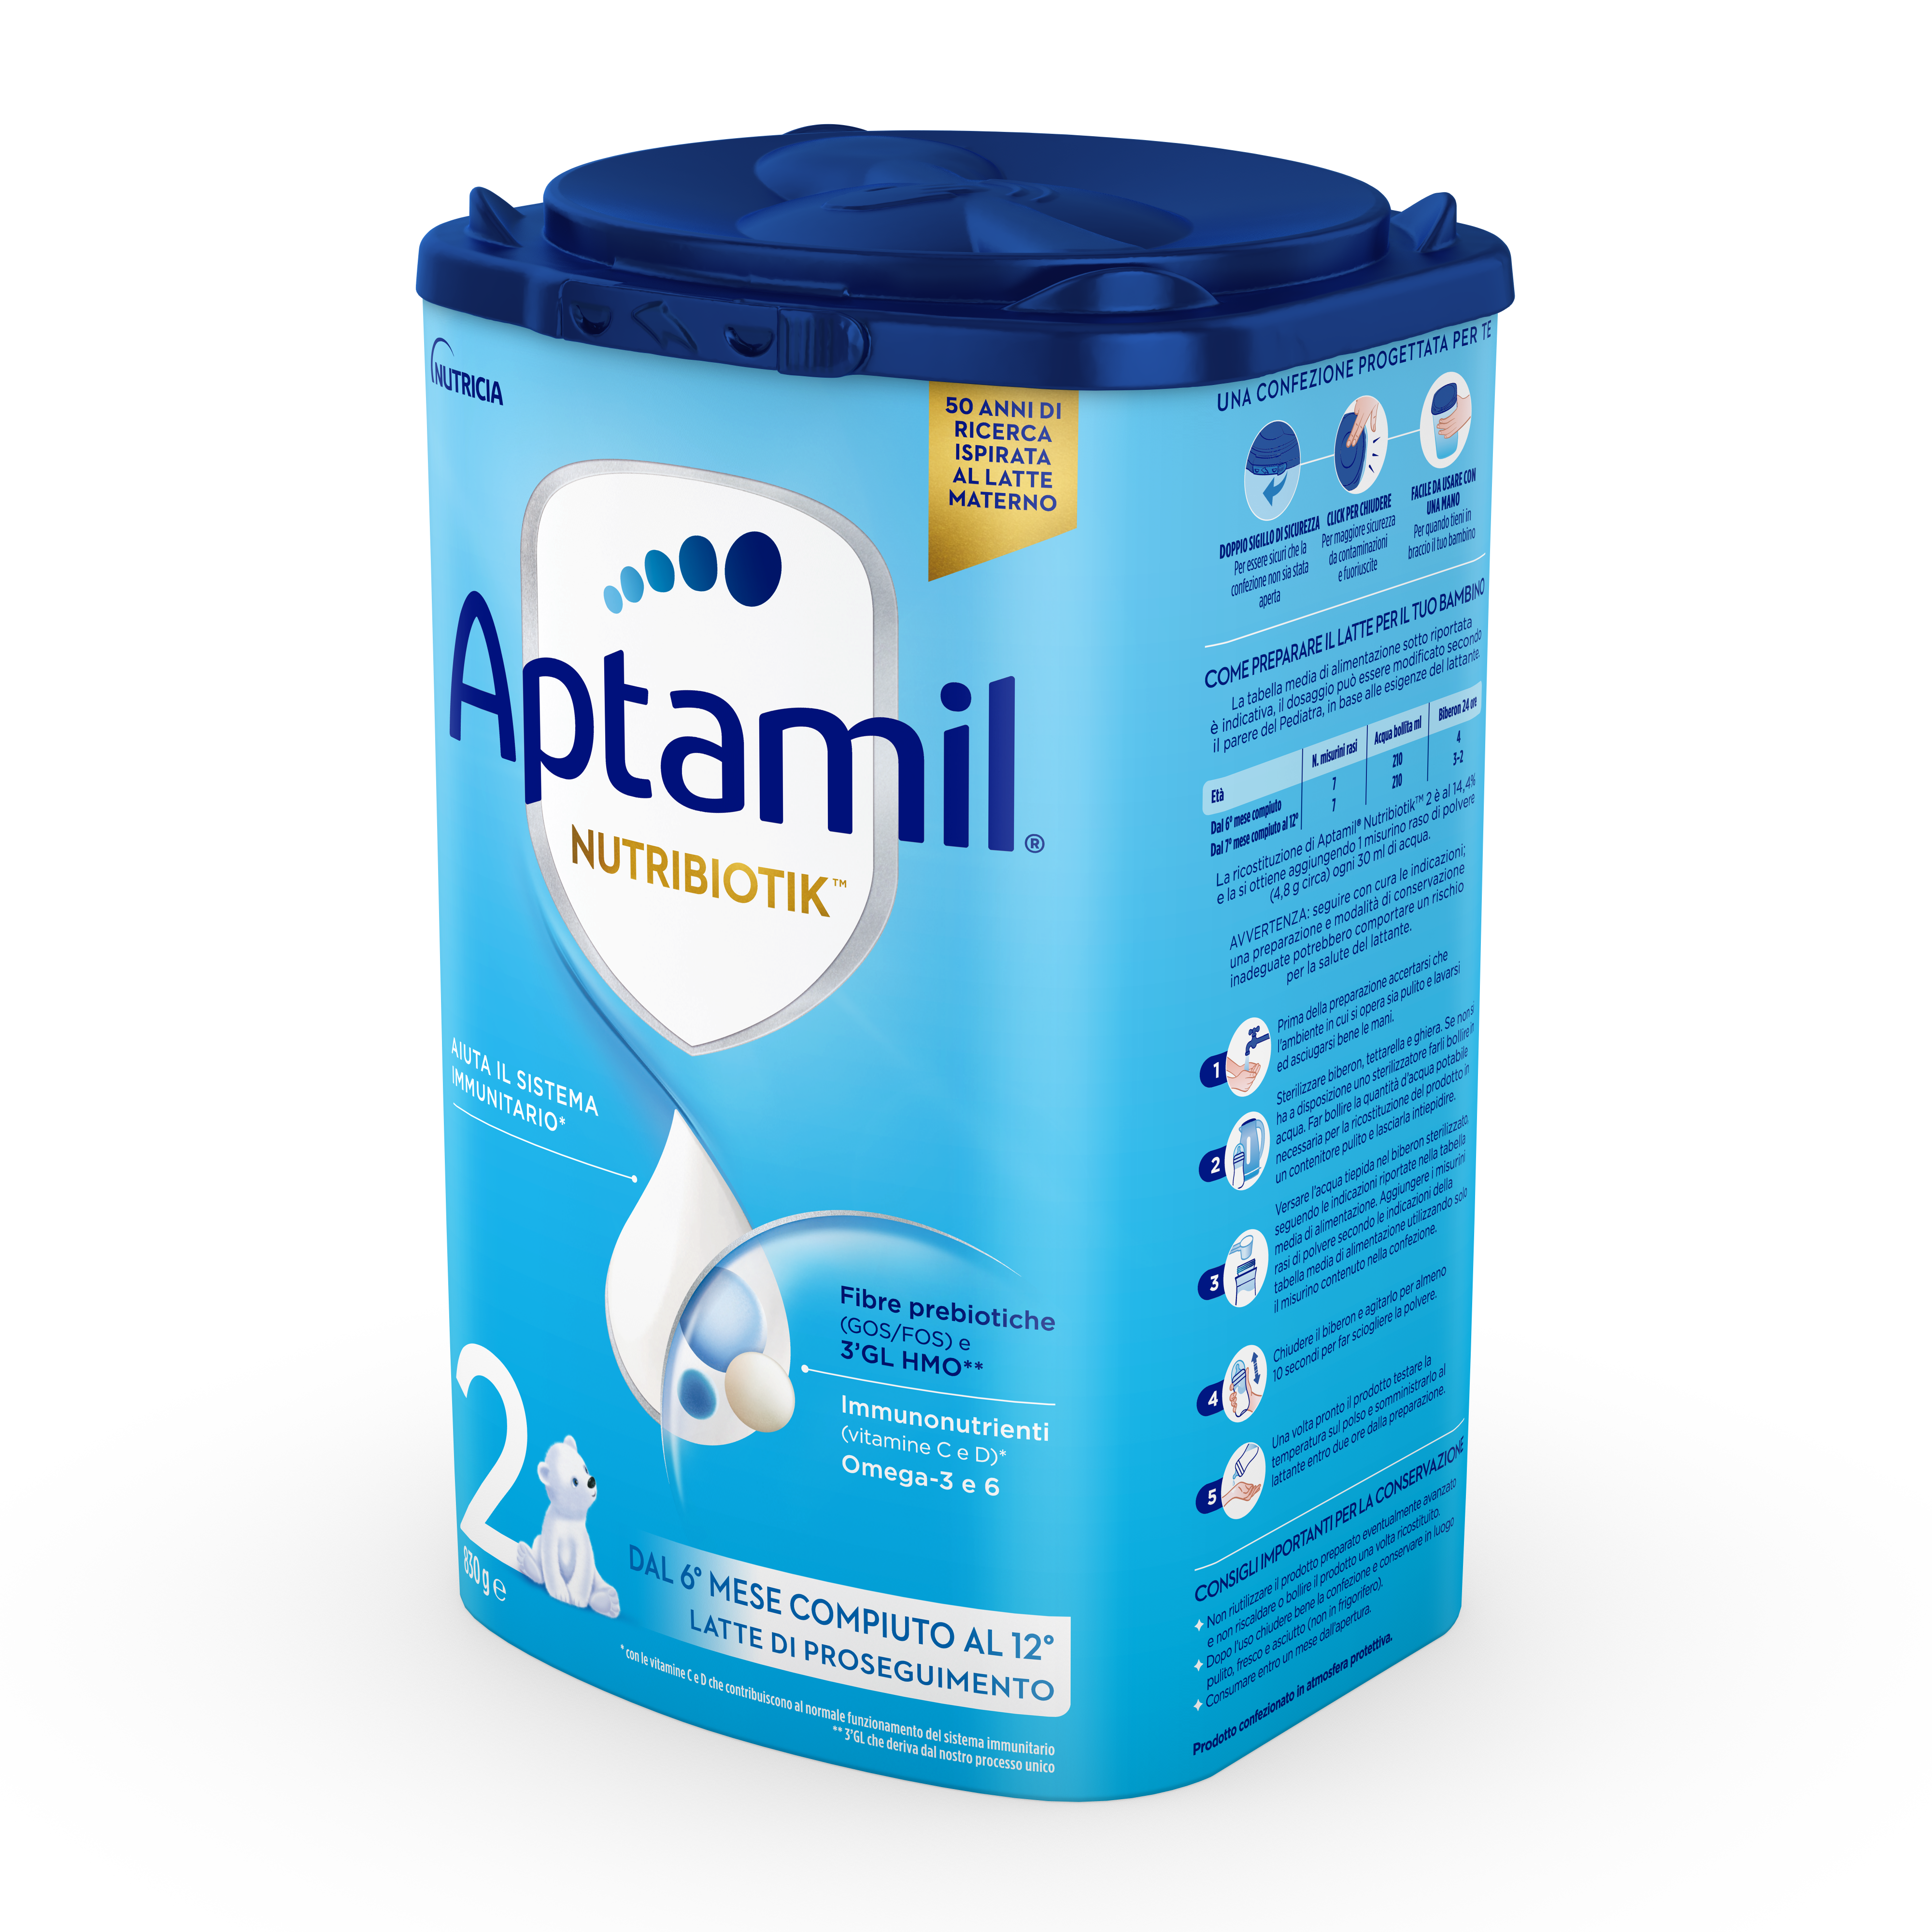 Aptamil nutribiotik 2 - latte di proseguimento in polvere indicato dal 6° mese compiuto al 12° - 830g - Aptamil